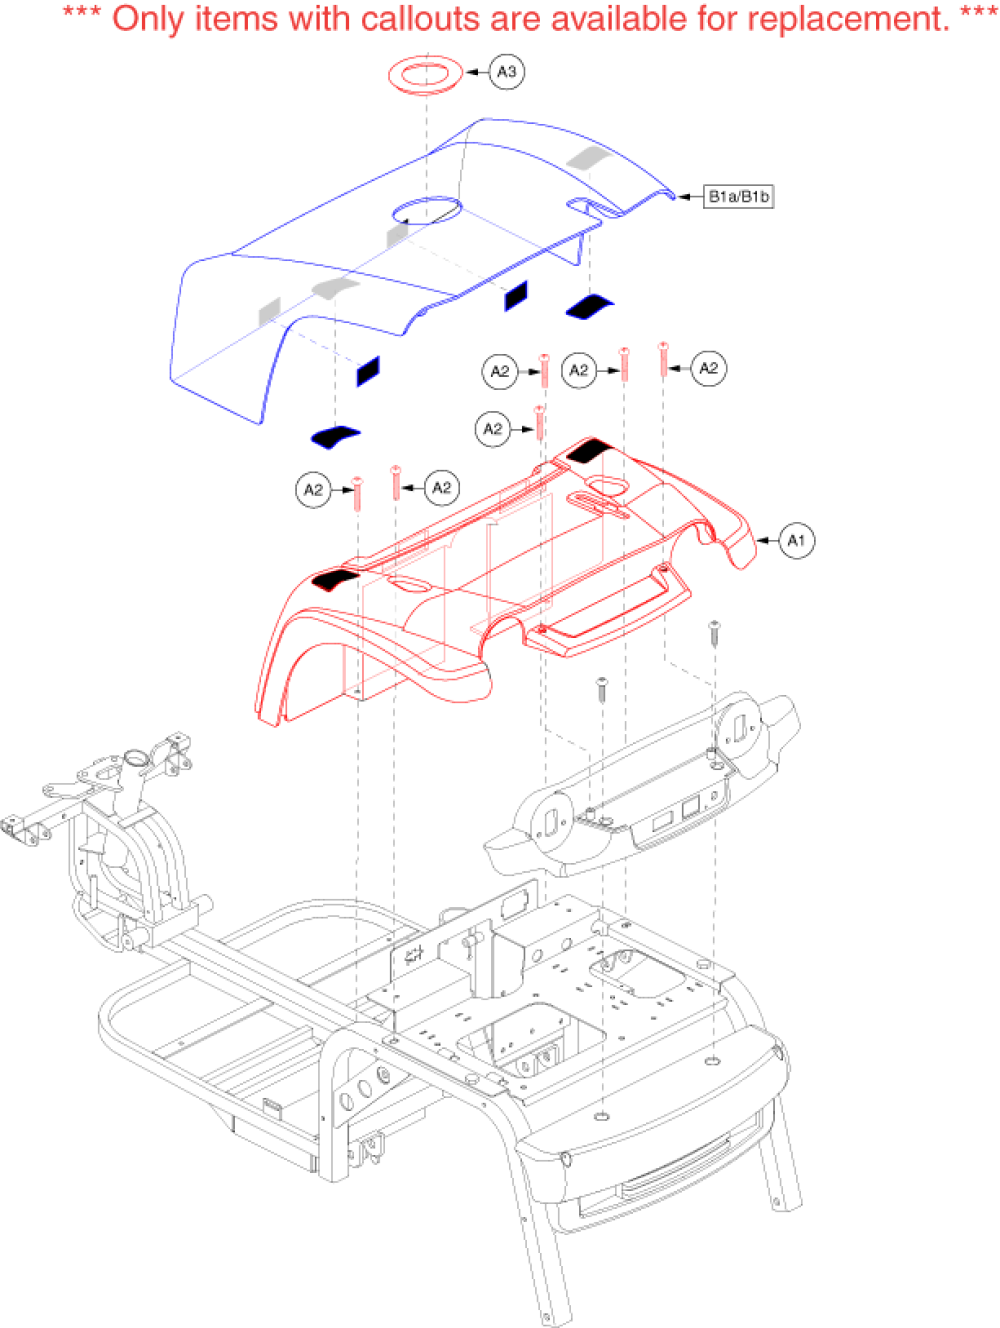 Shroud Assembly - Rear parts diagram